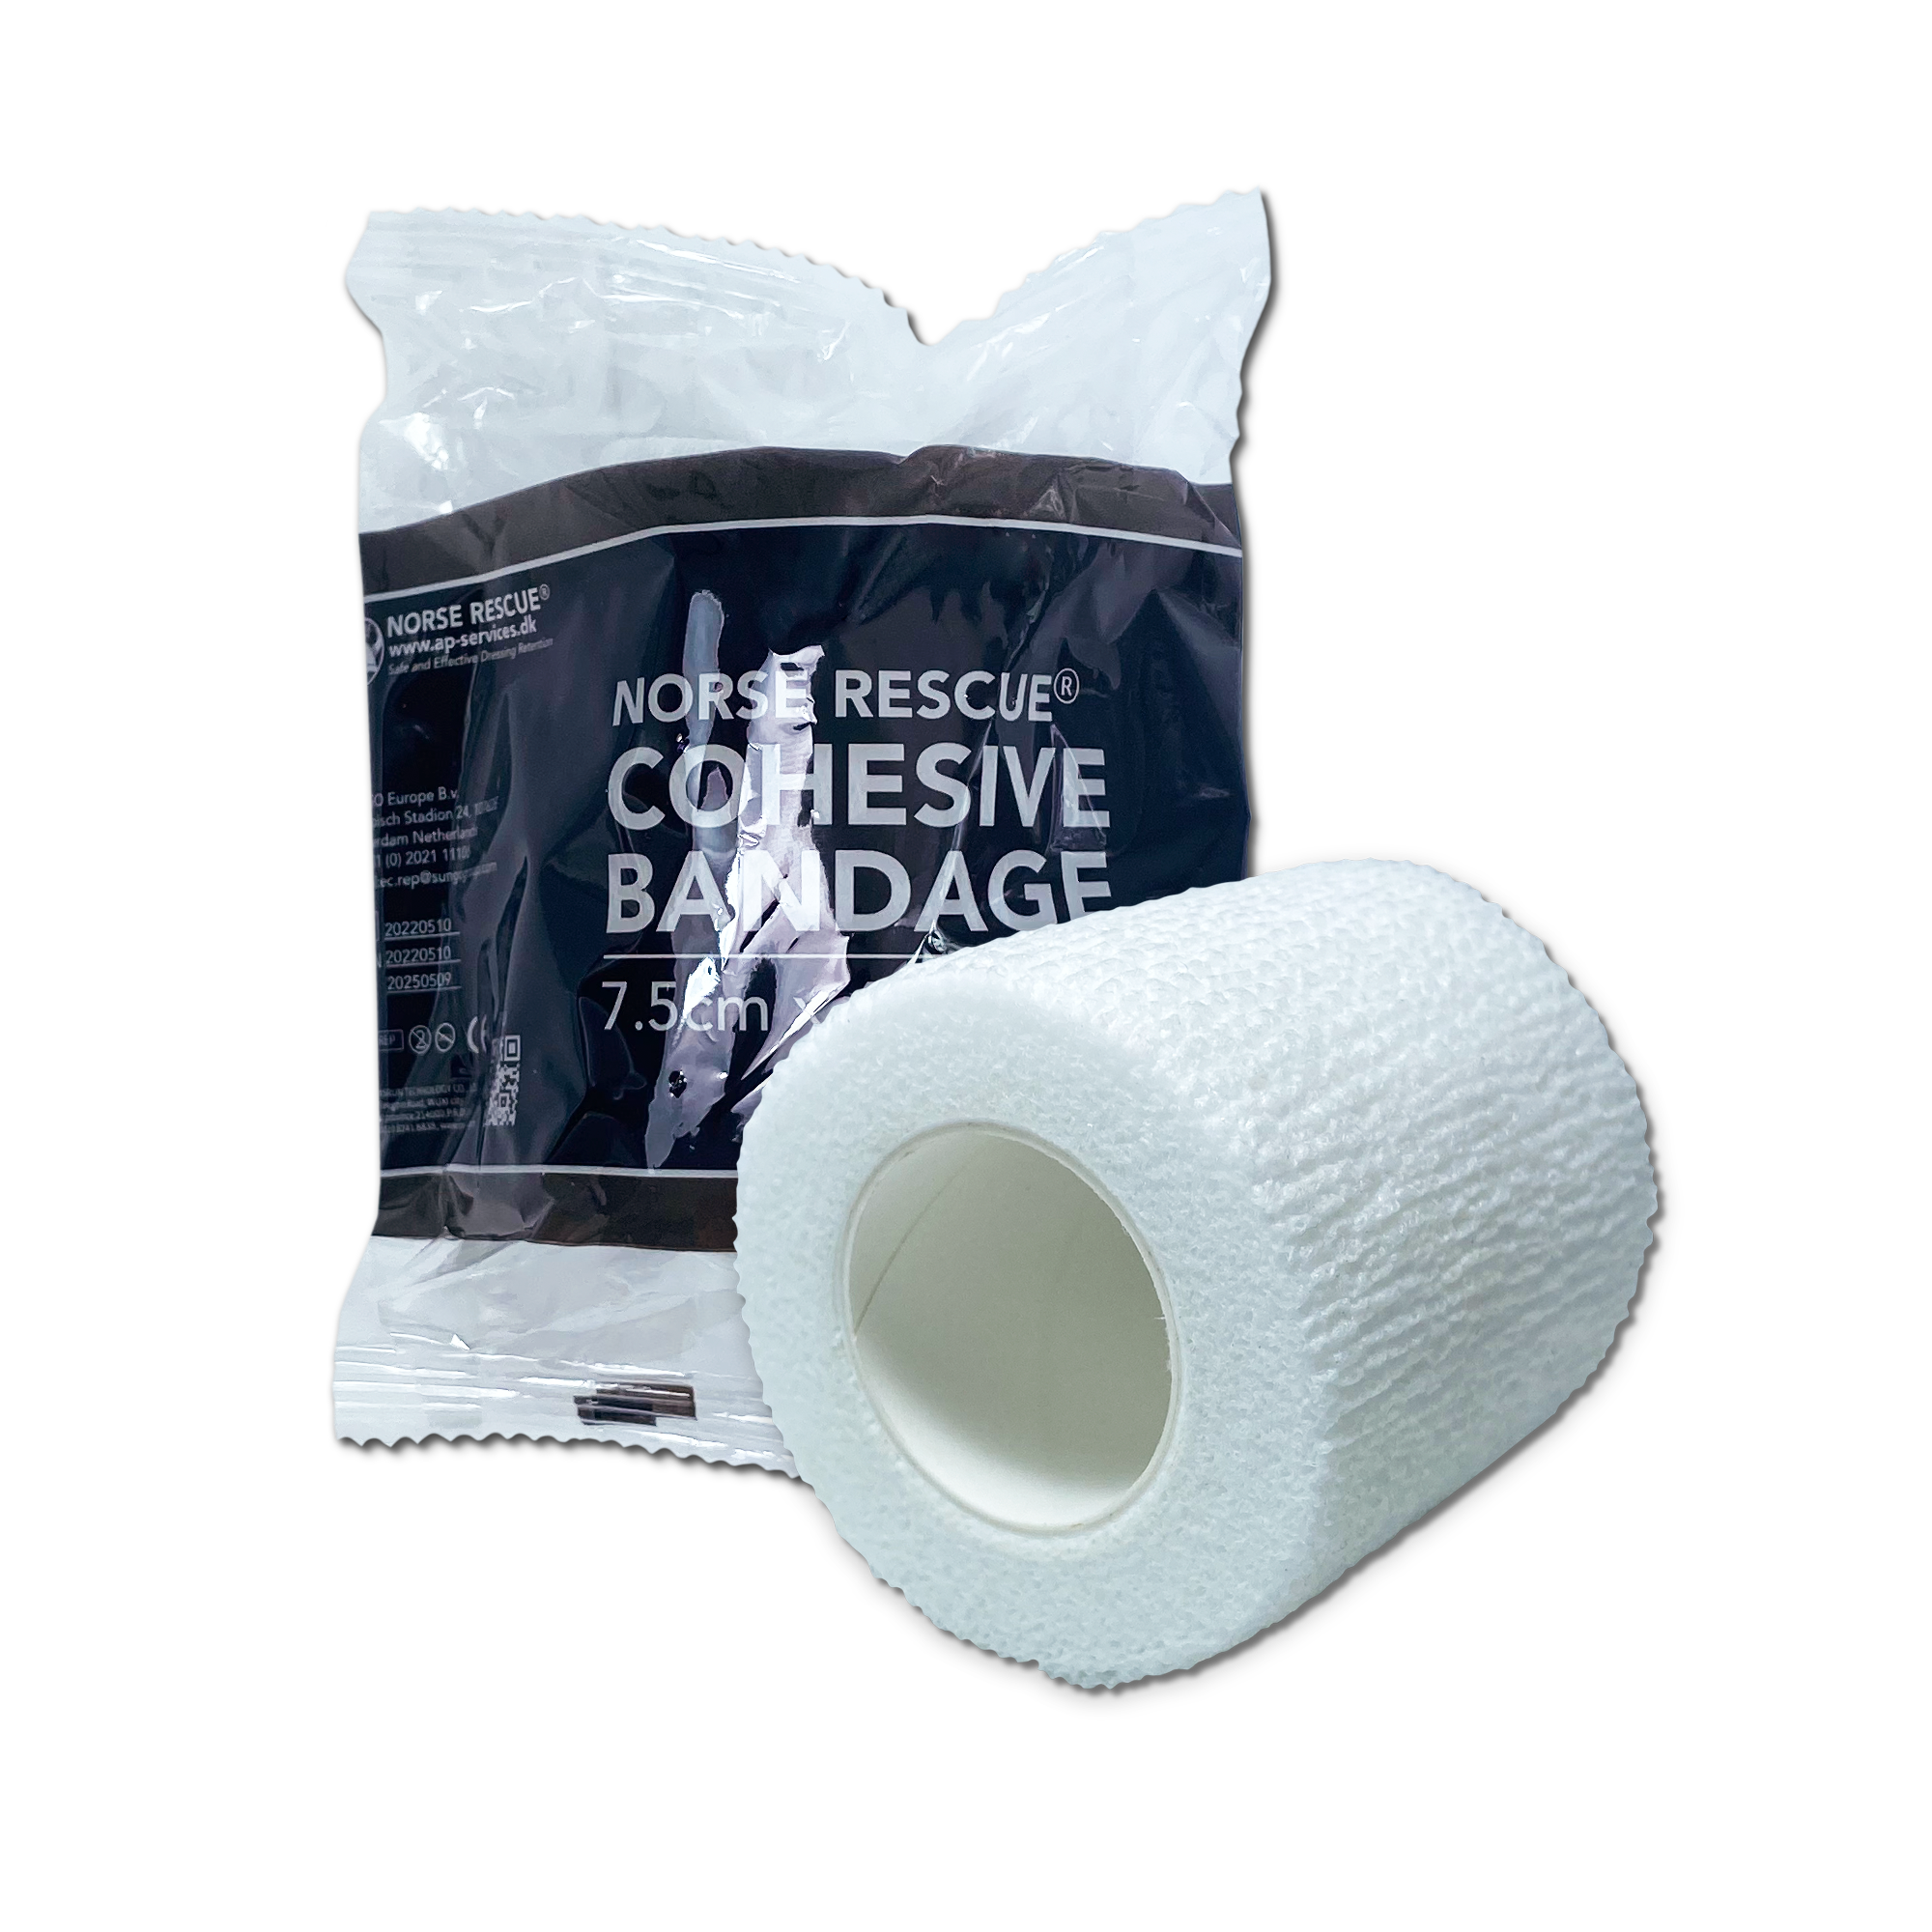 NORSE RESCUE® Cohesive Bandage